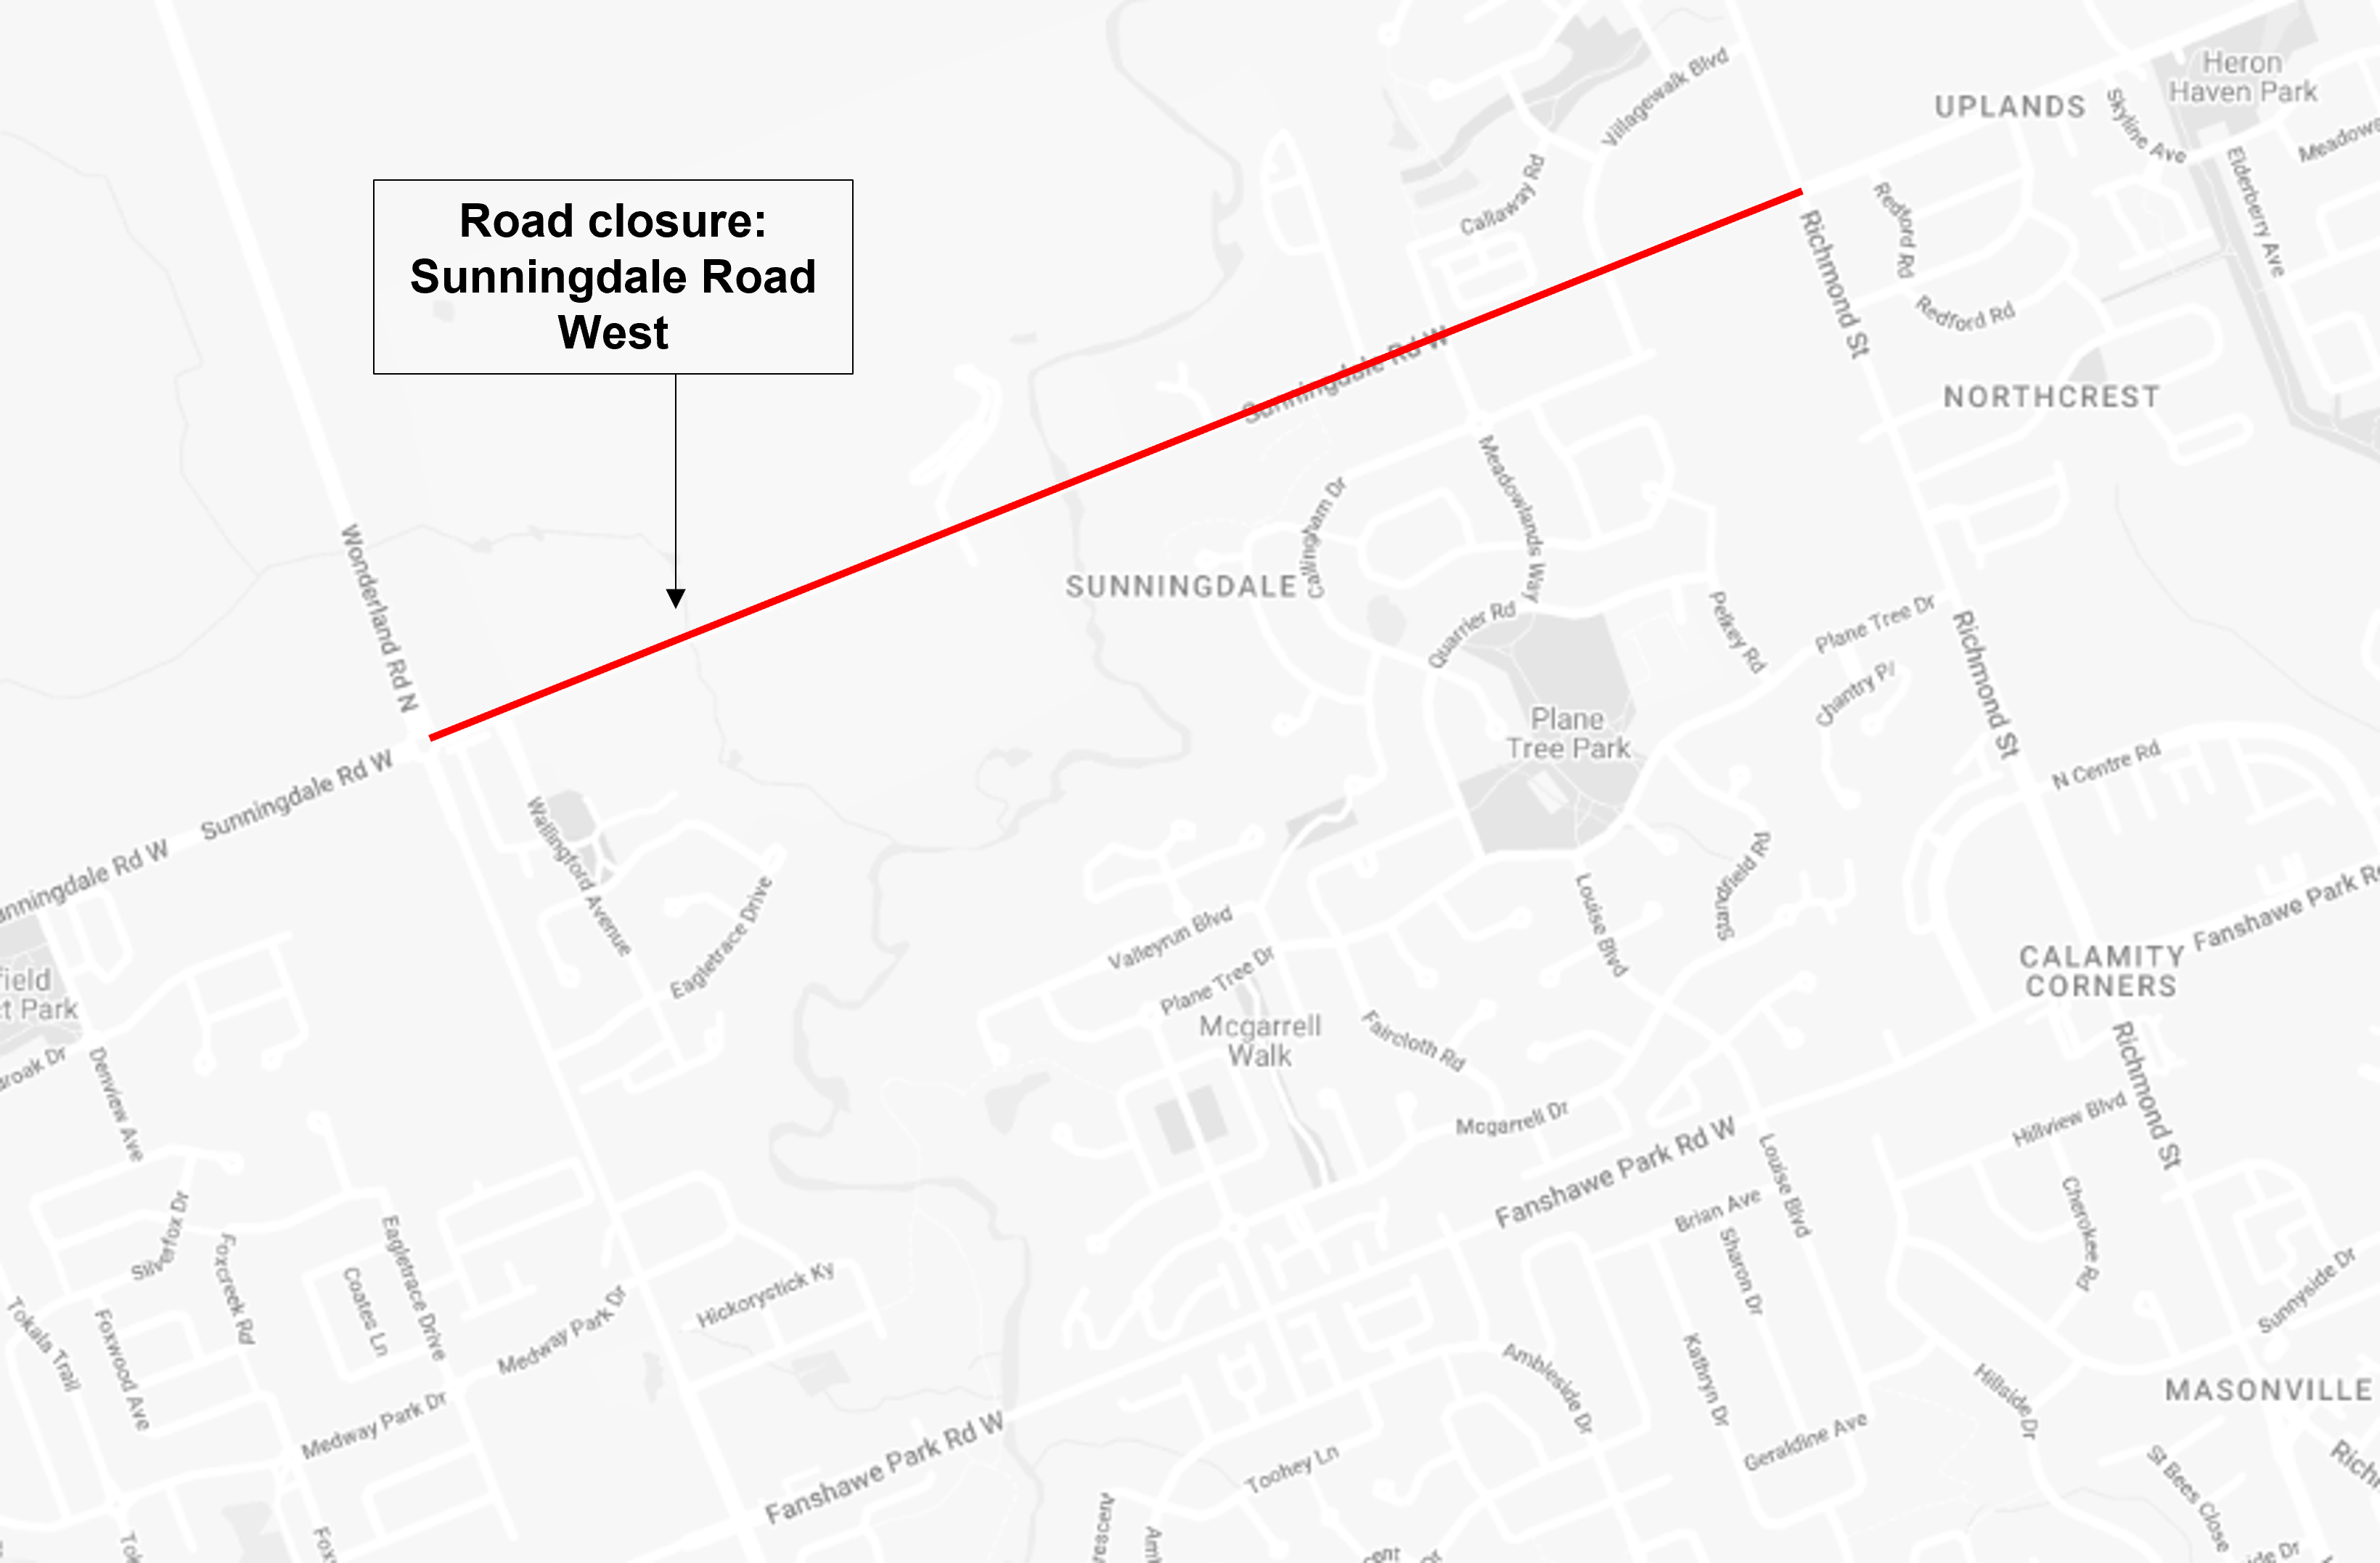 Map of Sunningdale Road closure